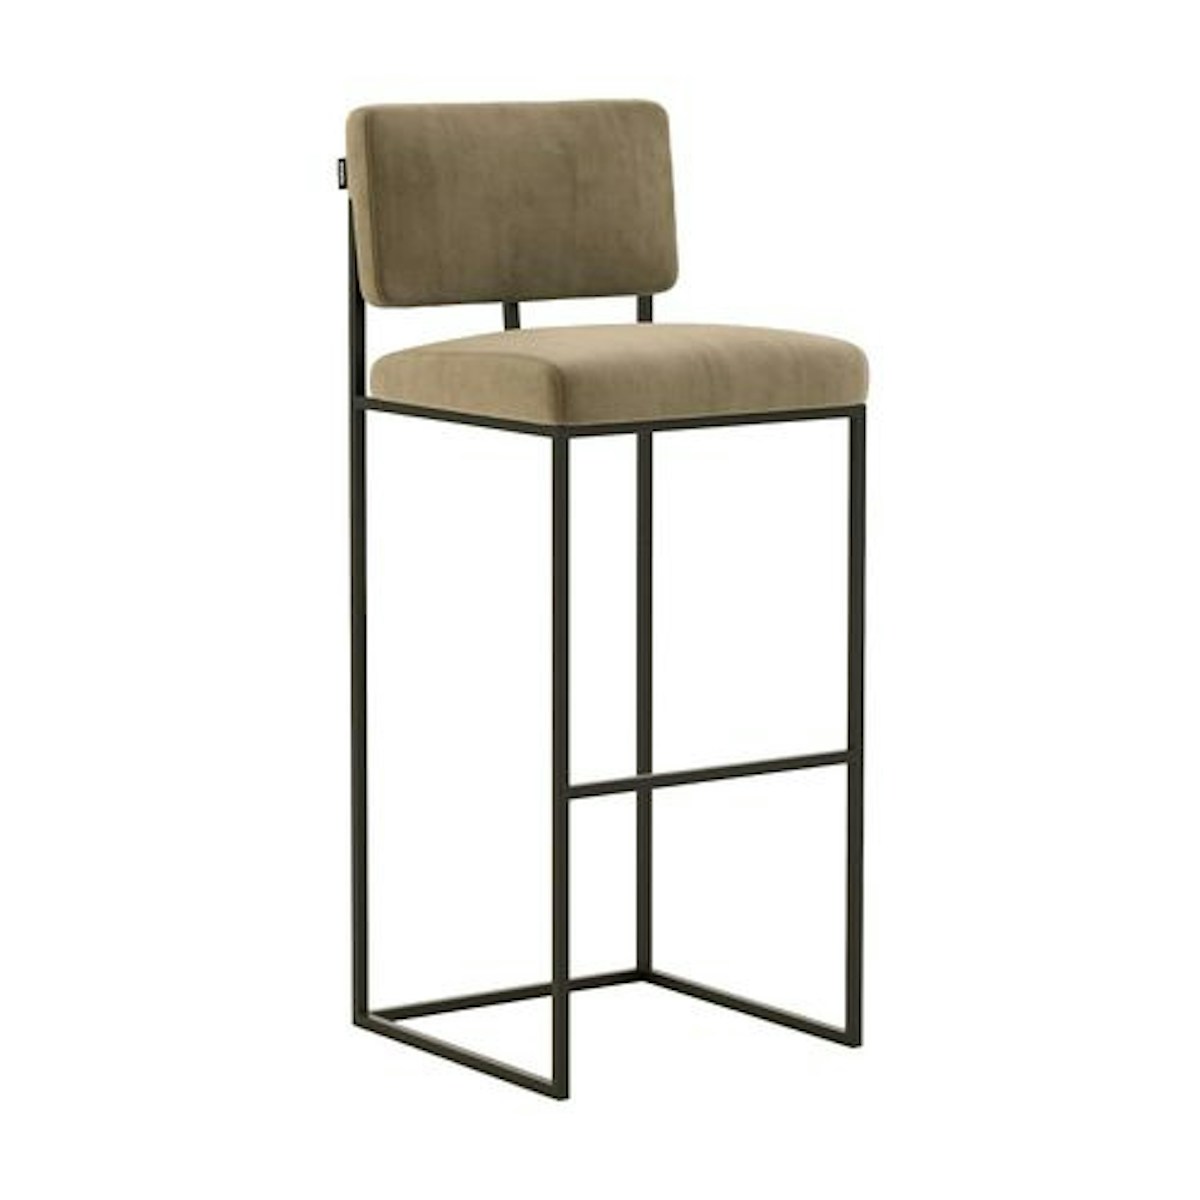 Gram Bar Chair - 9 Best Bar Stools For Your Kitchen Island & Breakfast Bars - LuxDeco.com